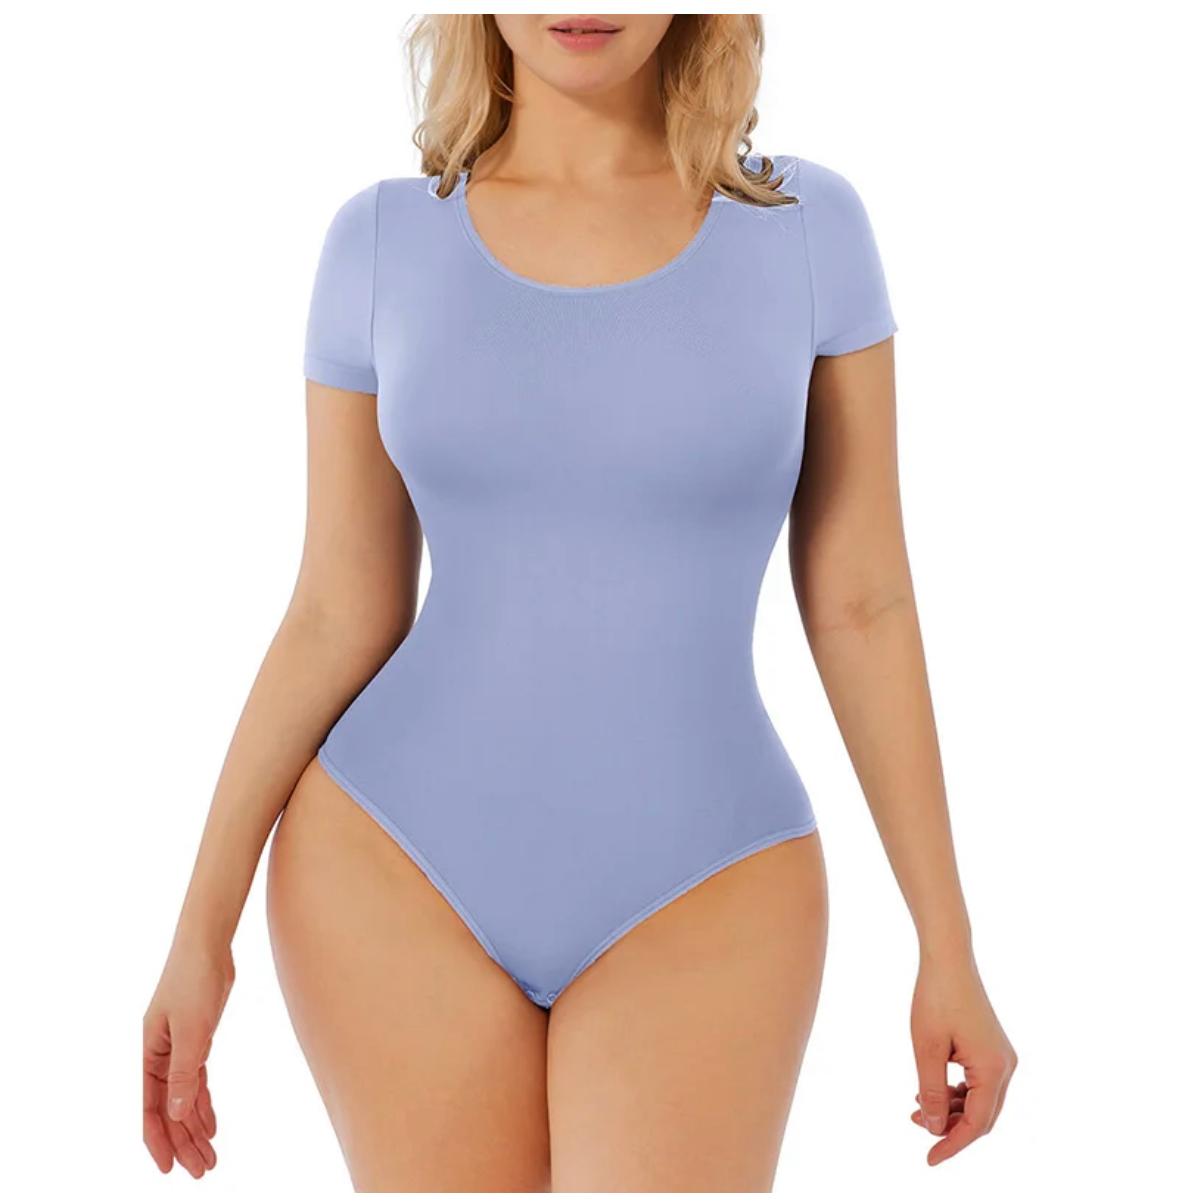 1-2 Bodysuit Full Body Shaper Waist Cincher Firm Tummy Control 65011 Plus  size JENNIFER Размер: 4XL (18-20) купить от 2651 рублей в интернет-магазине  , корректирующее белье для женщин J